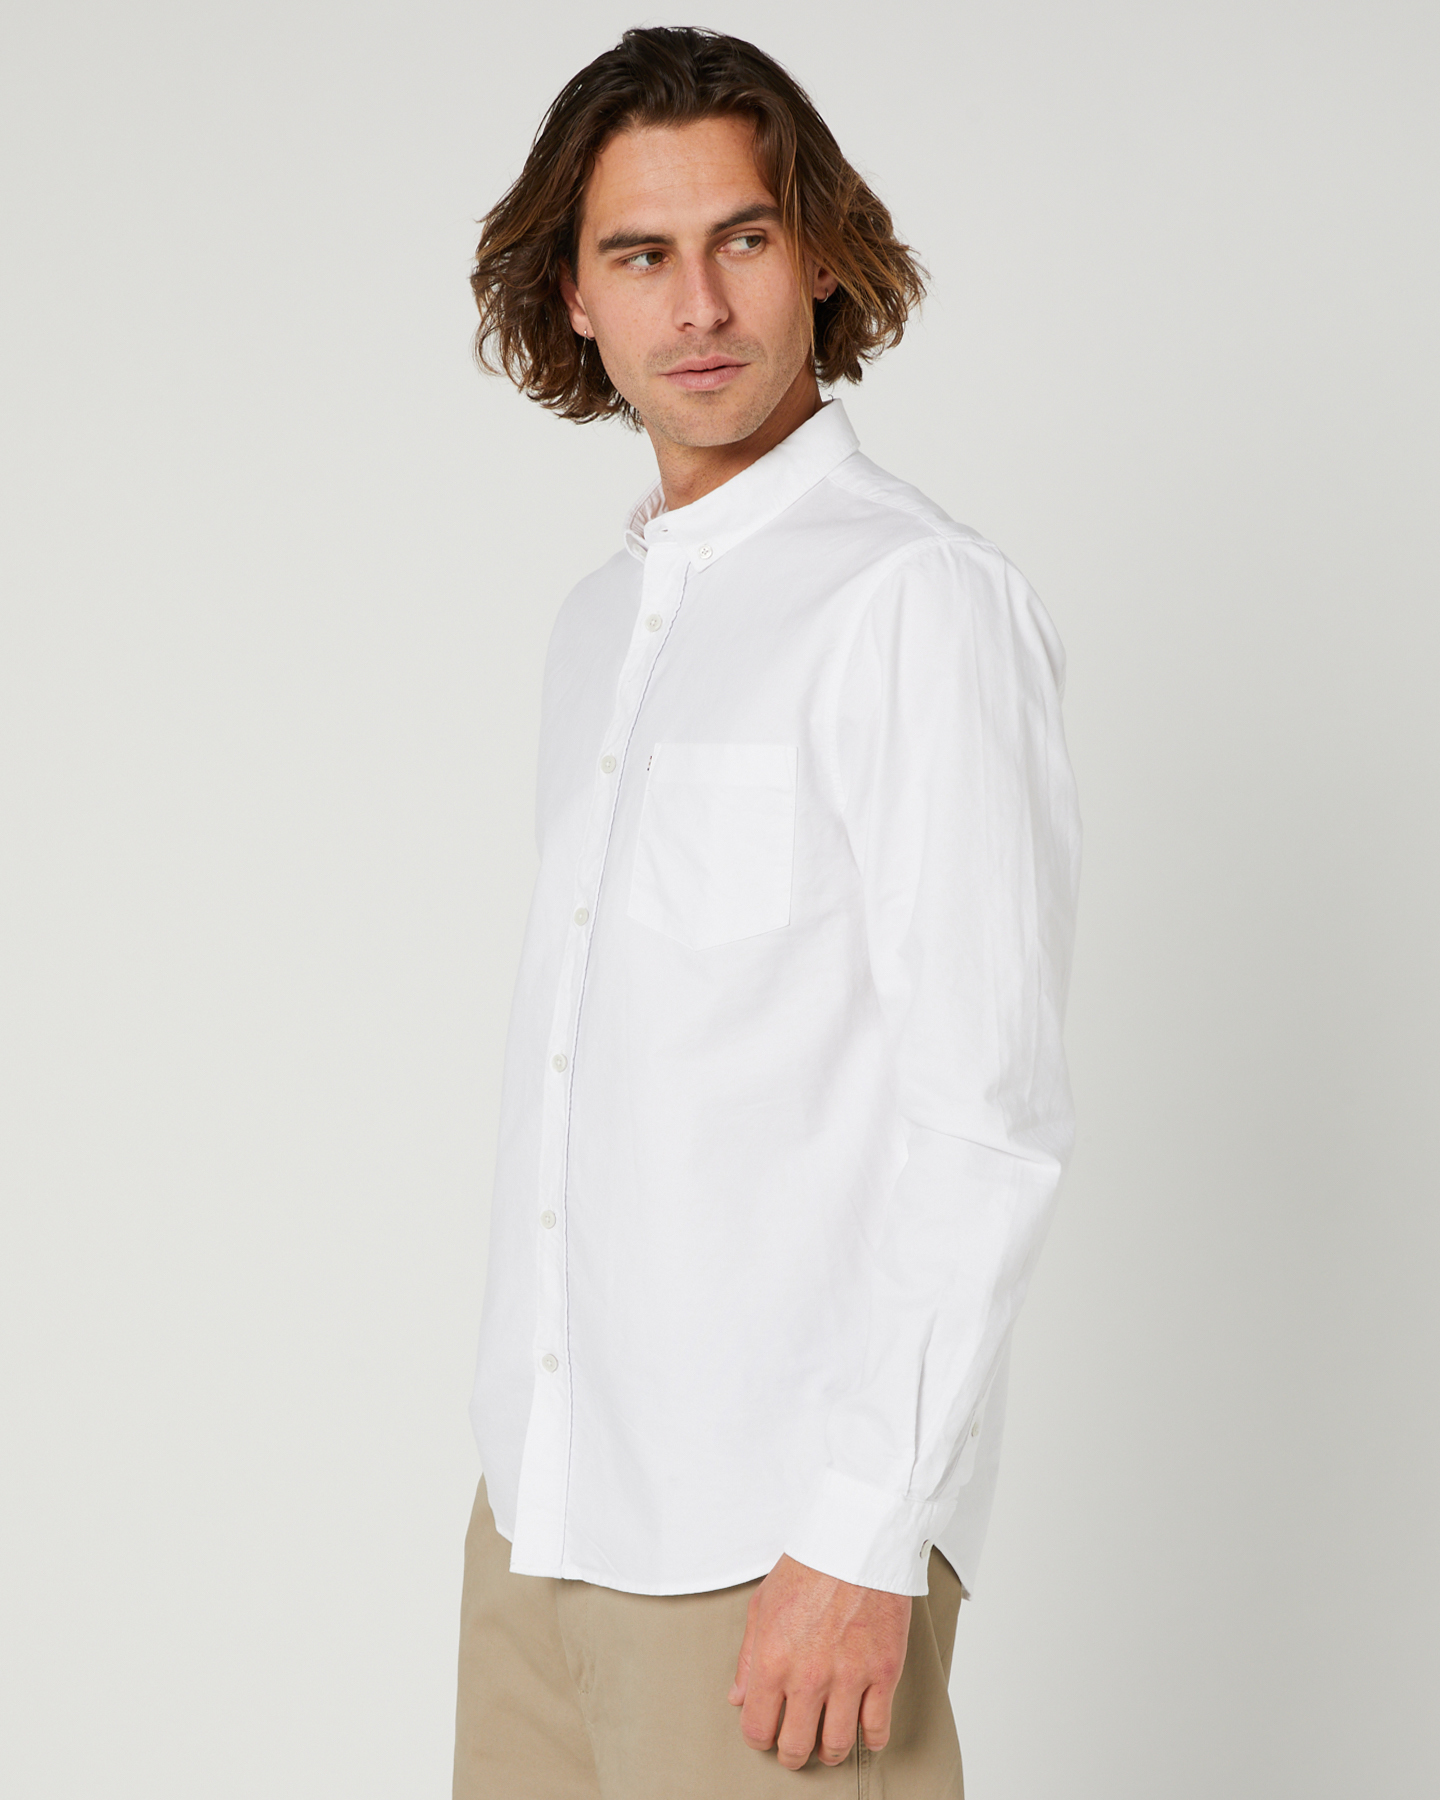 Academy Brand Dillon Mens Ls Oxford Shirt - White | SurfStitch